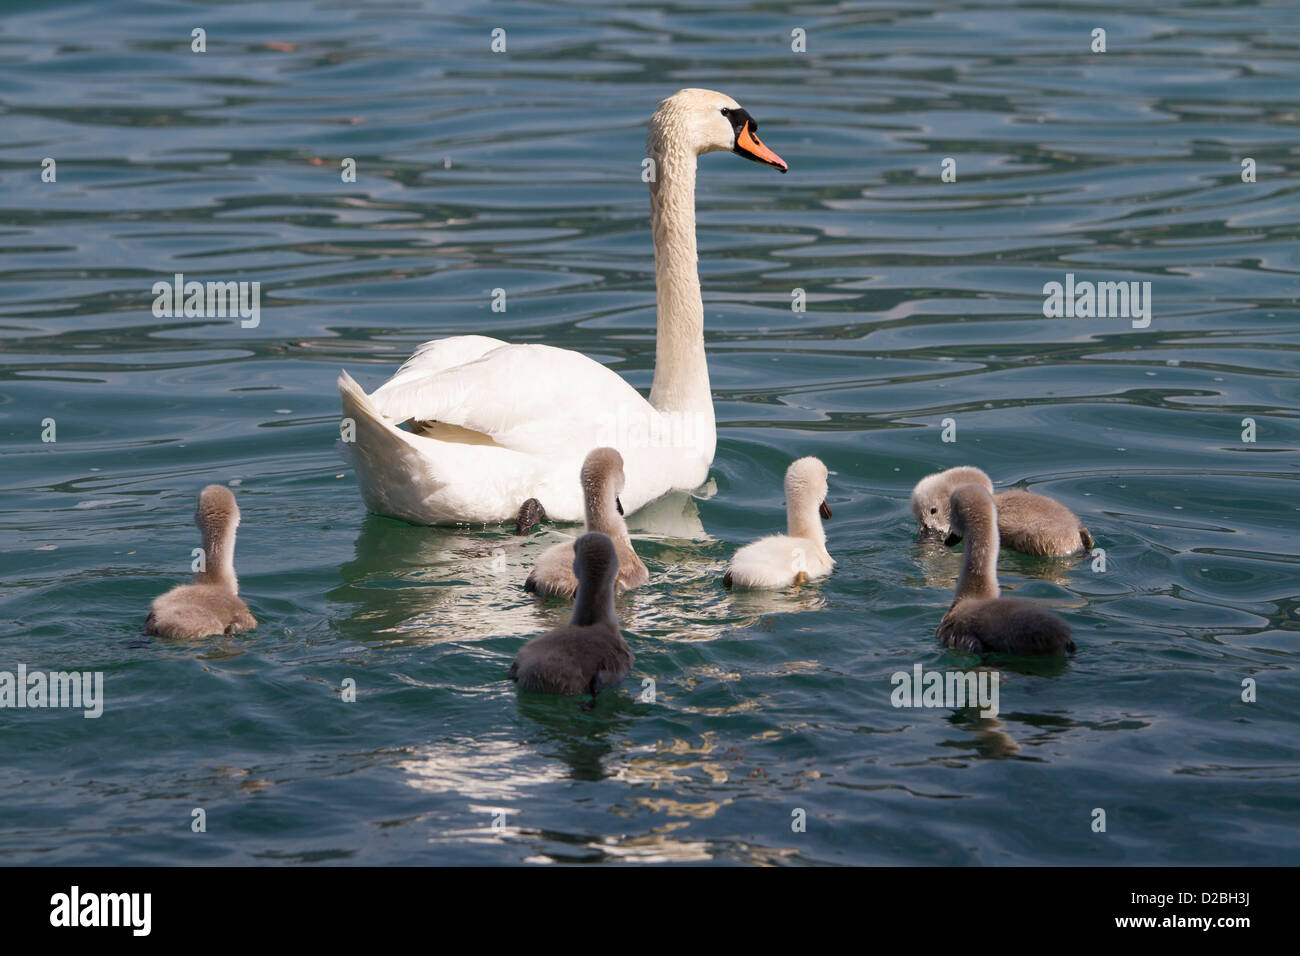 Famille swan Banque D'Images